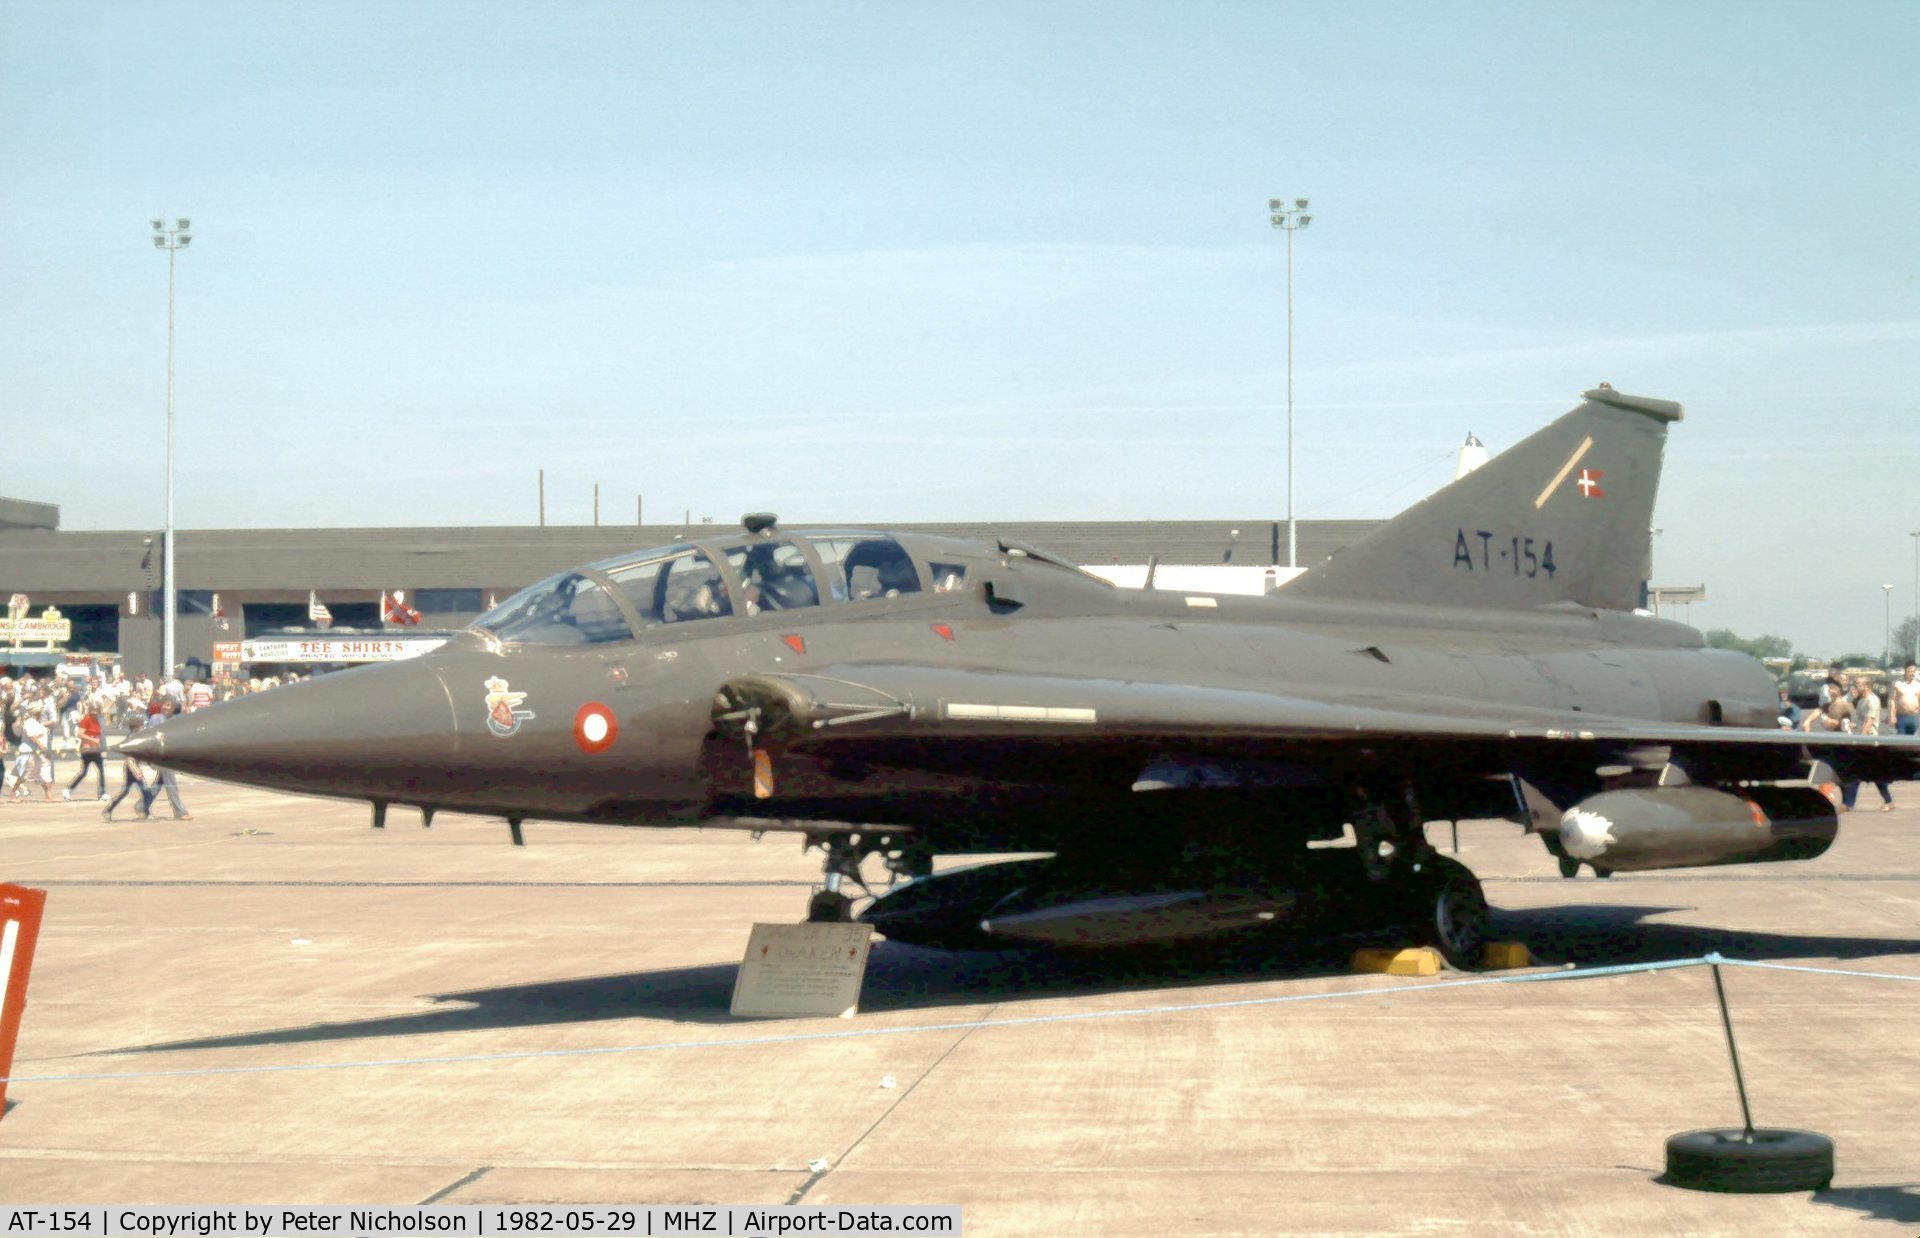 AT-154, 1971 Saab TF-35 Draken C/N 35-1154, Sk-35XD Draken of Esk 729 Royal Danish Air Force at the 1982 RAF Mildenhall Air Fete.